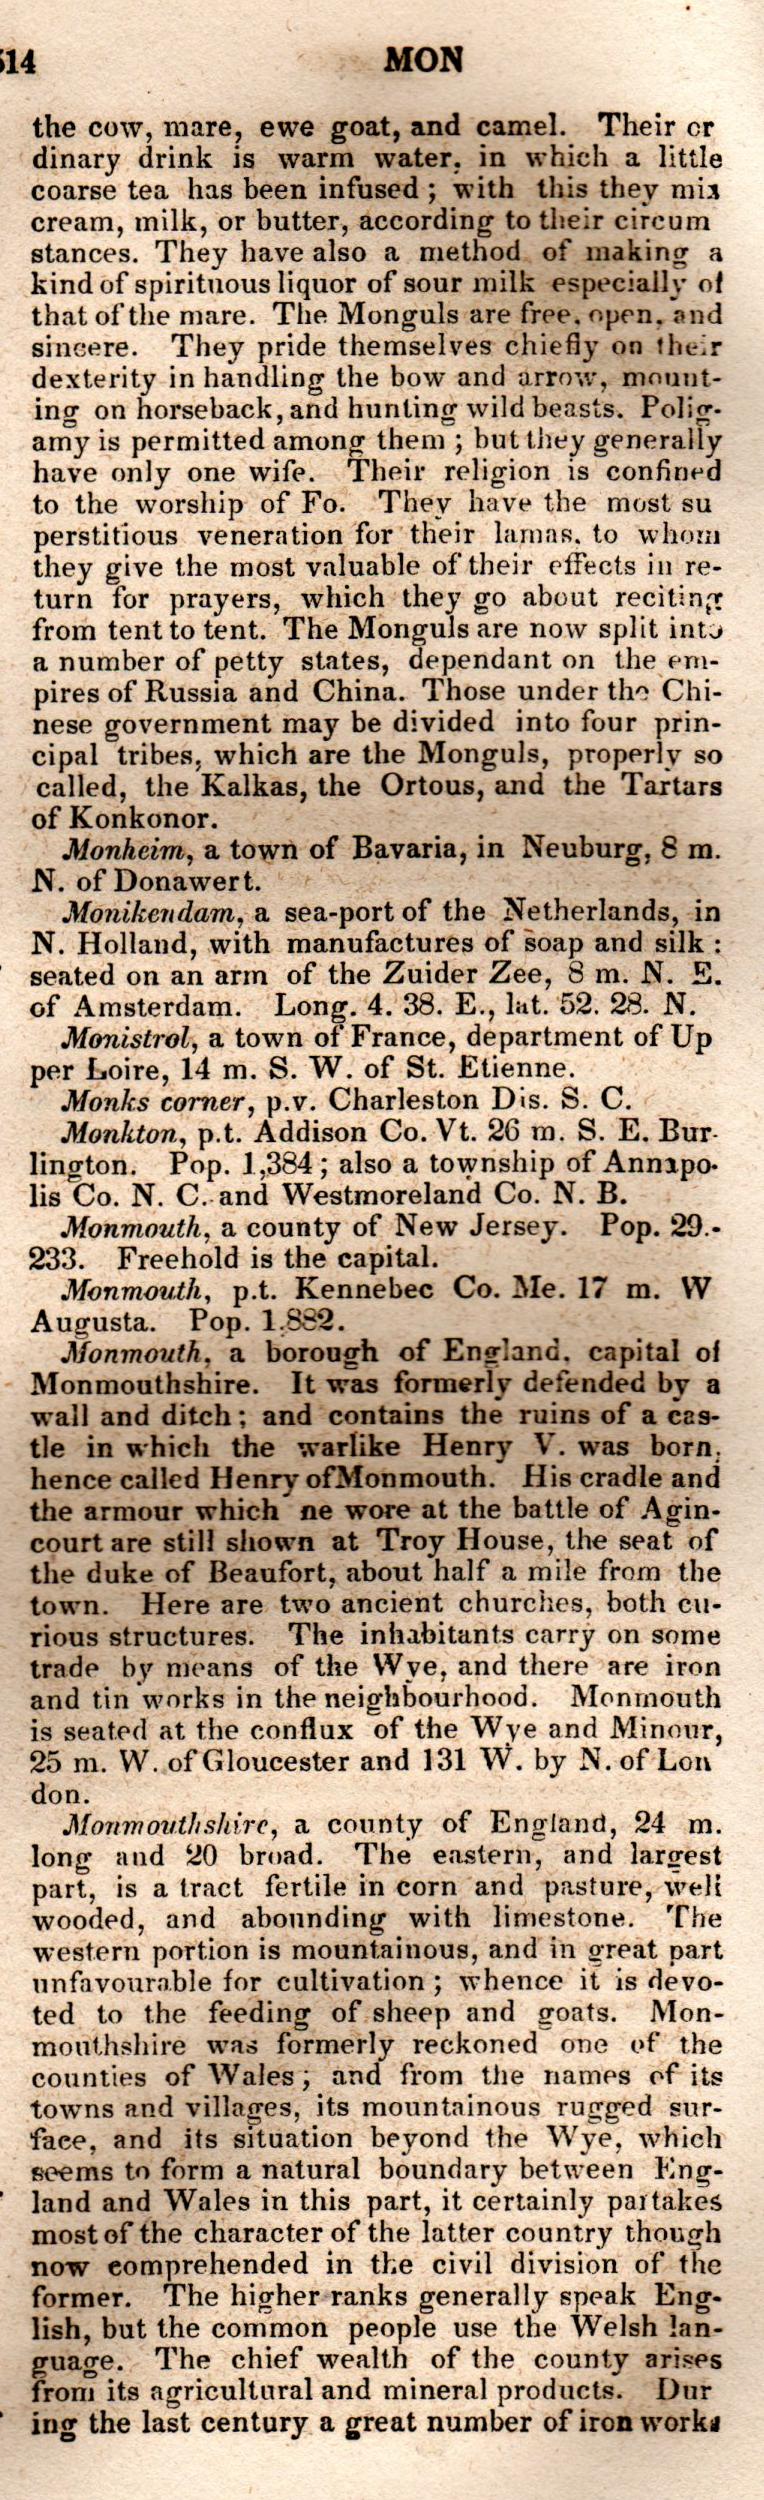 Brookes’ Universal Gazetteer (1850), Page 514 Right Column